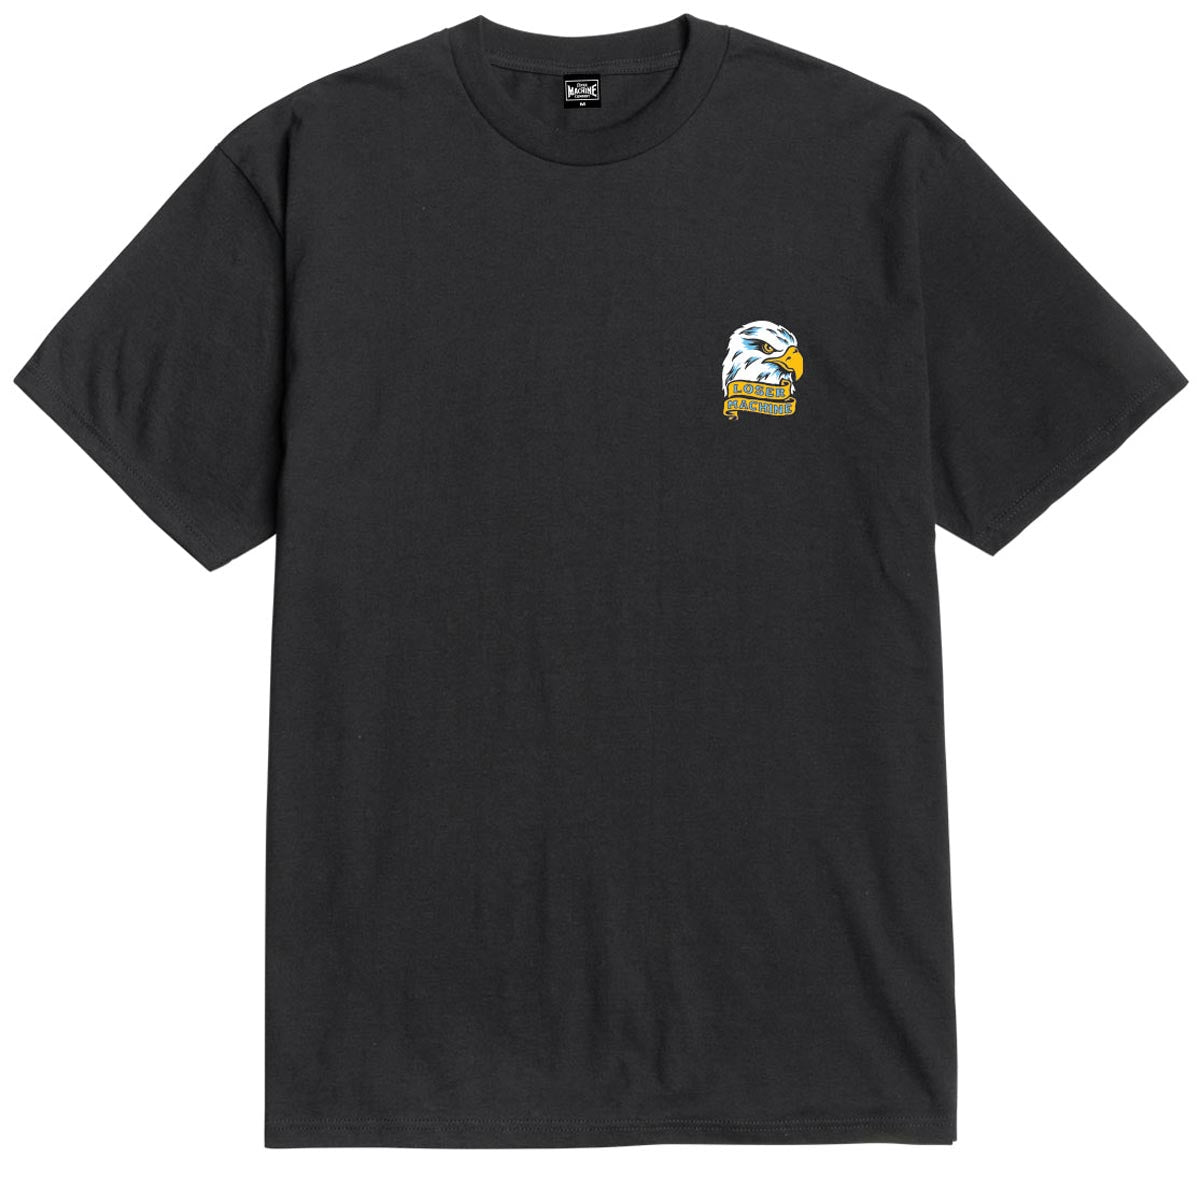 Loser Machine Chrome Covers T-Shirt - Black image 2